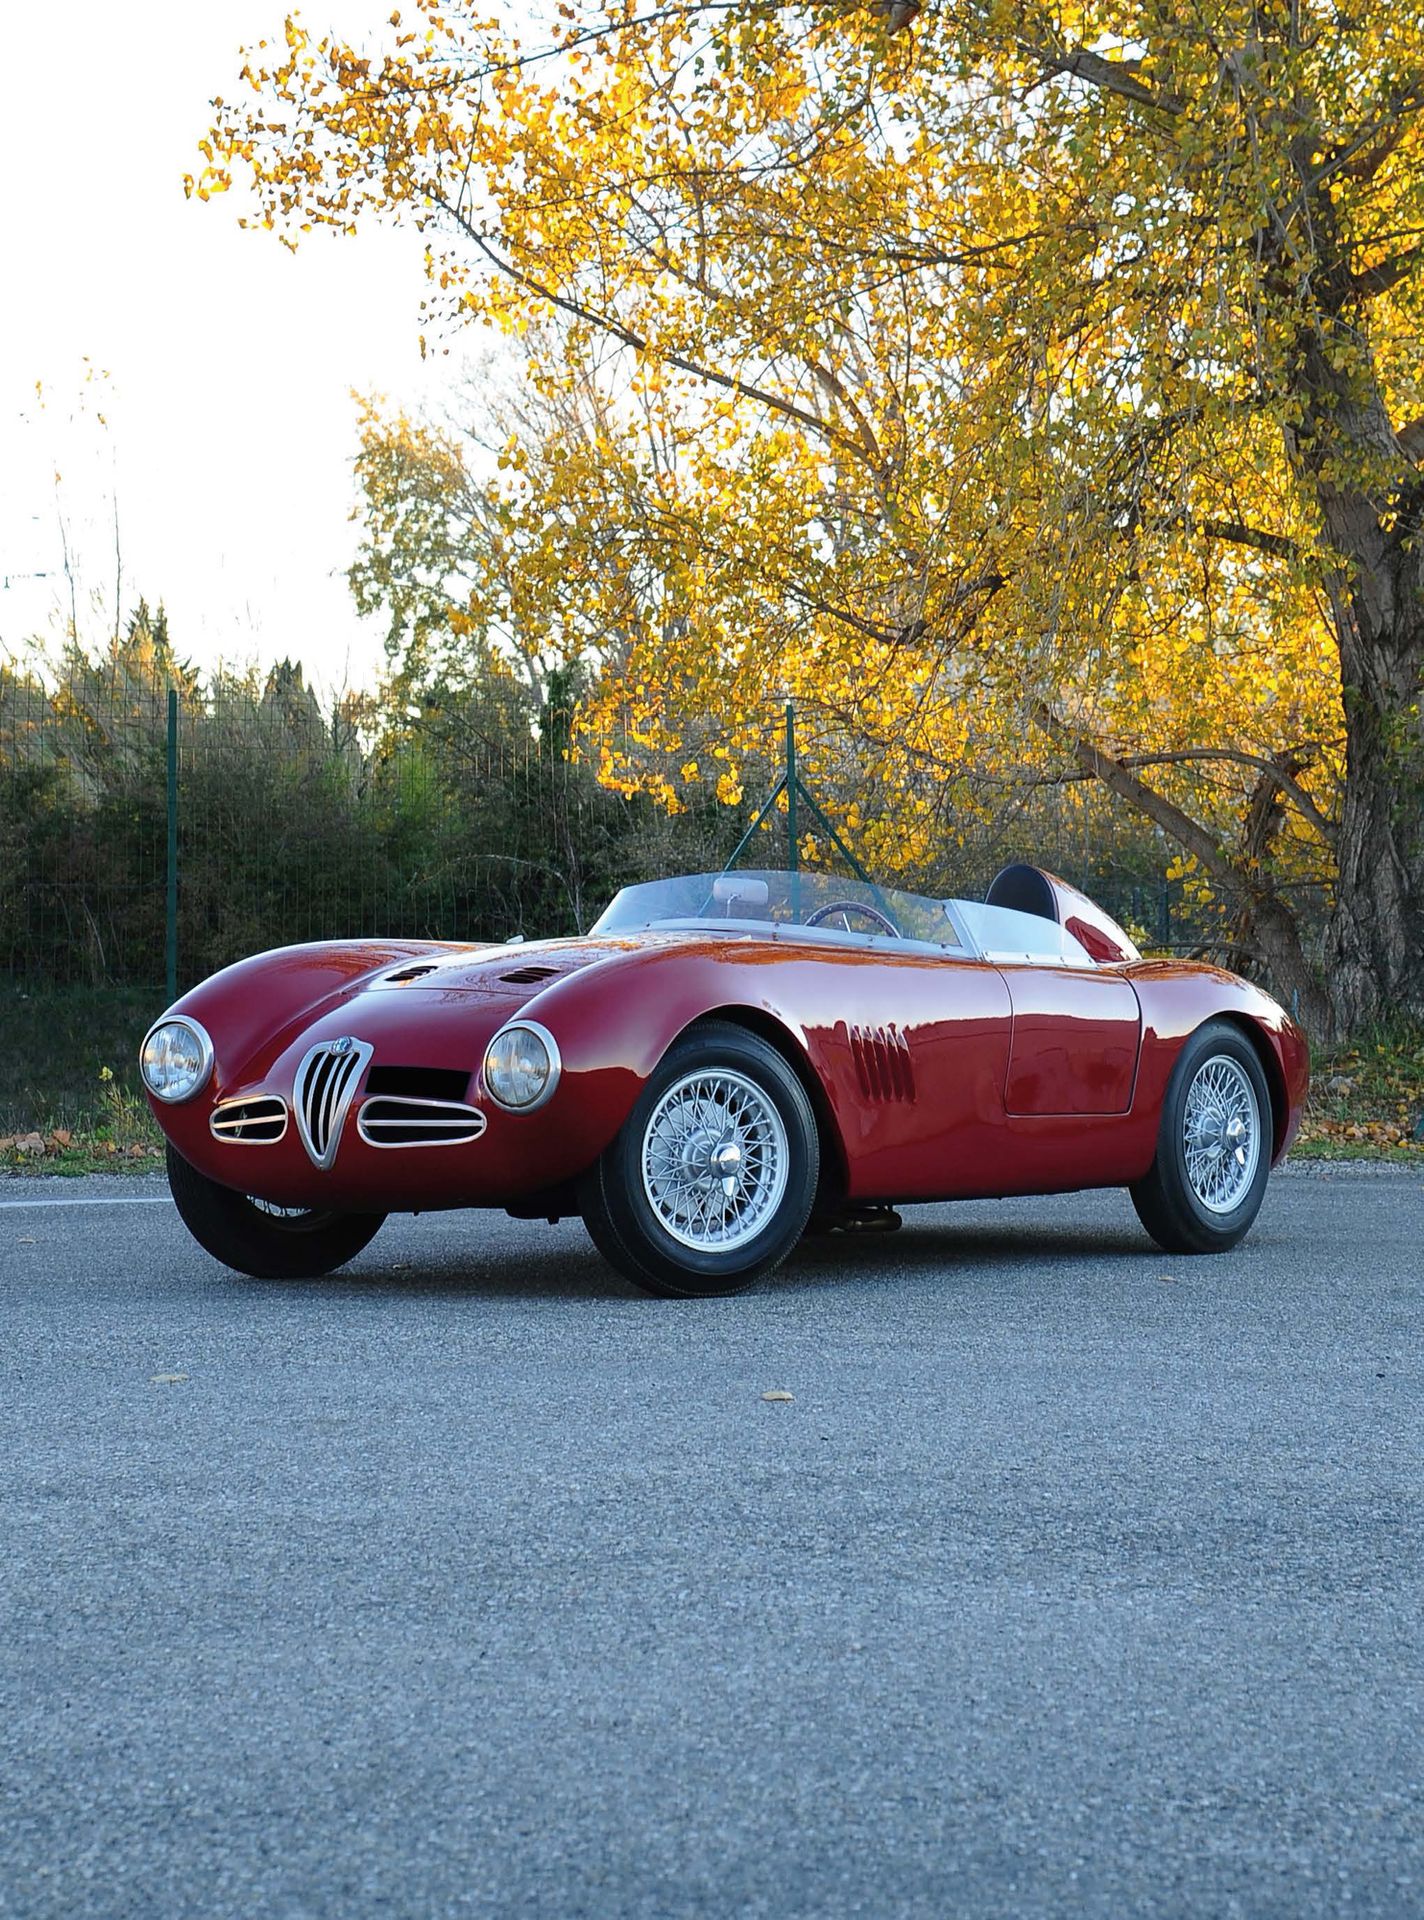 1959 ALFA ROMEO BARCHETTA 1300 
铝制车身

对一个过去的时代的激动人心的见证

经过验证的、高性能的机械装置



法国收藏家的&hellip;